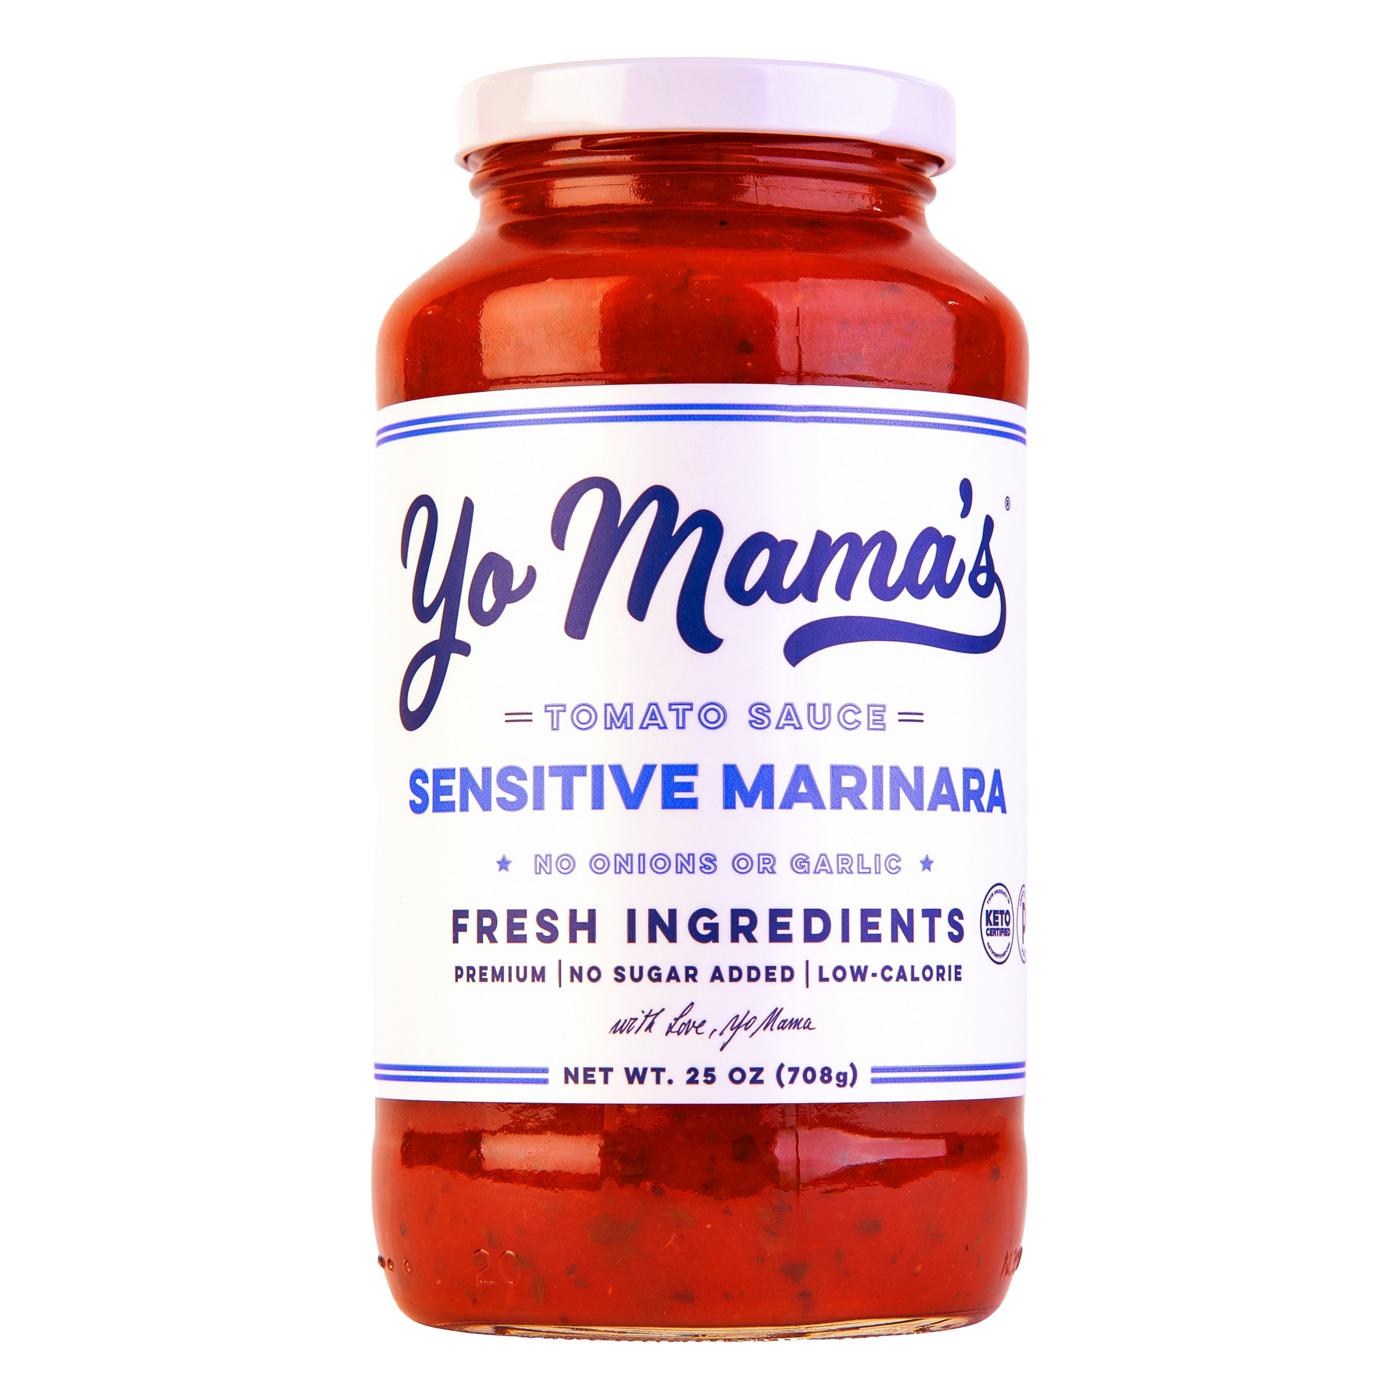 Yo Mama's Sensitive Marinara Tomato Sauce; image 1 of 3